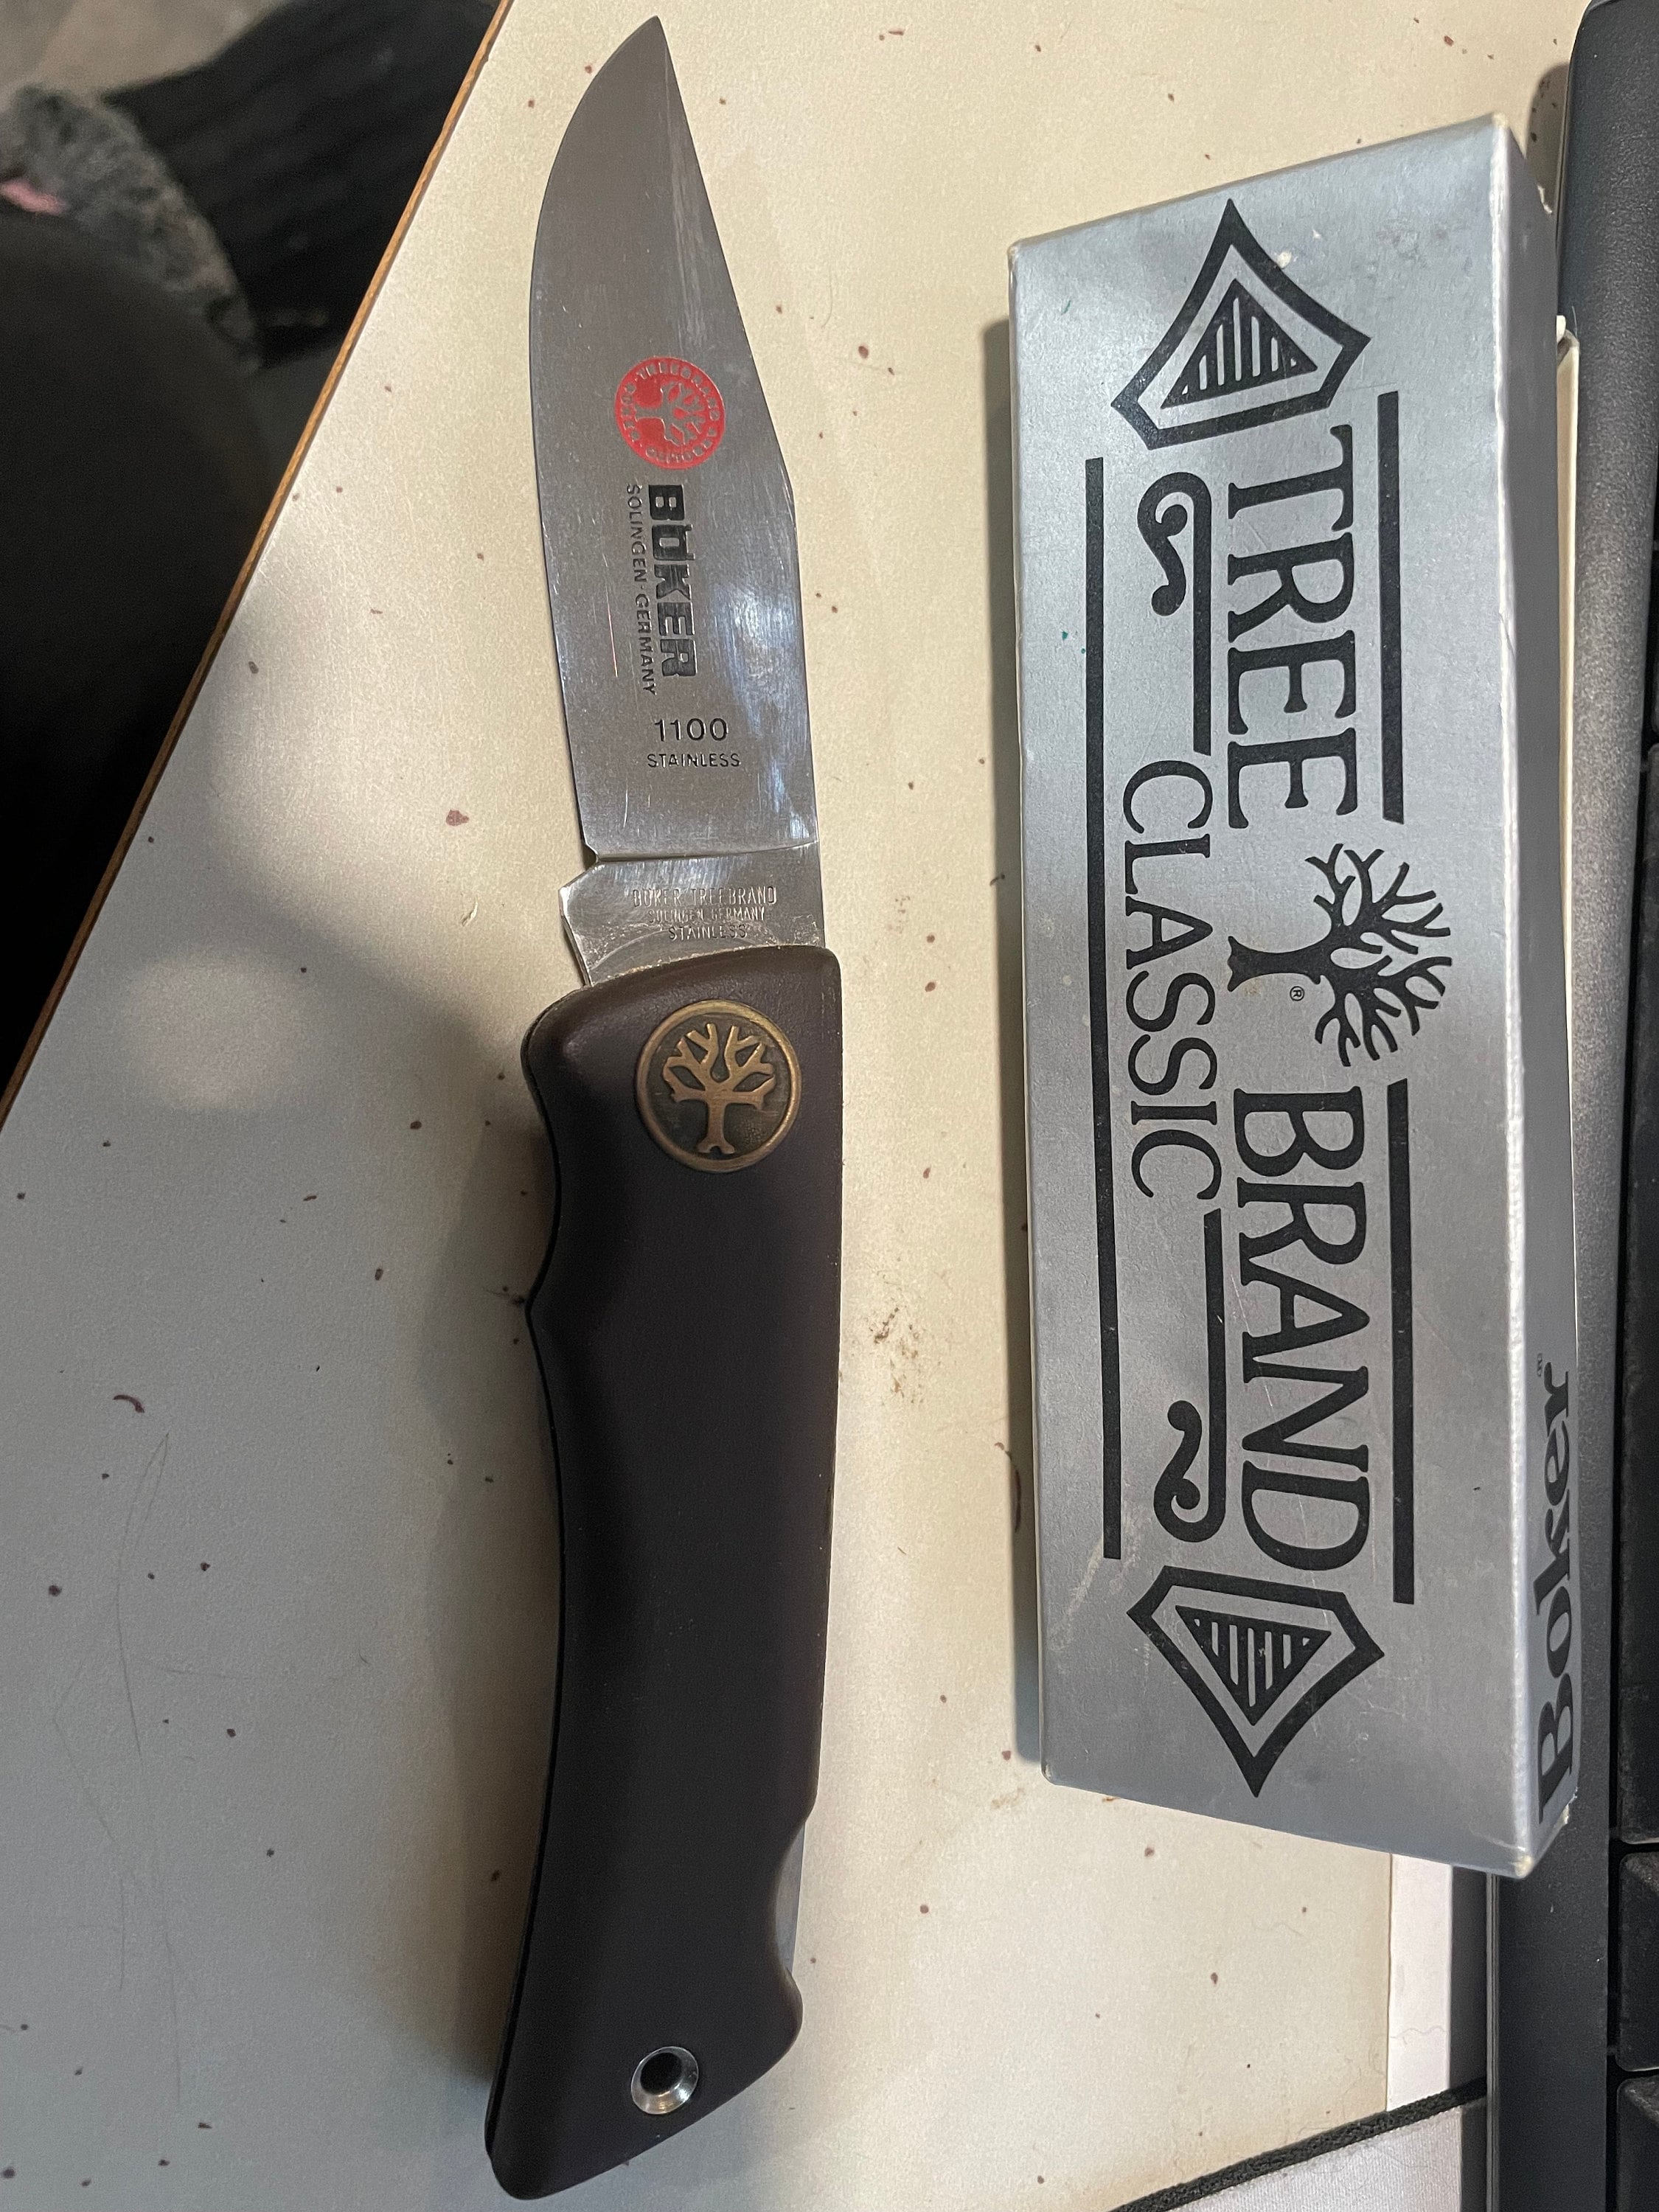 Boker Tree Brand, 4 Blade Folding Pocket Knife Stag Handle